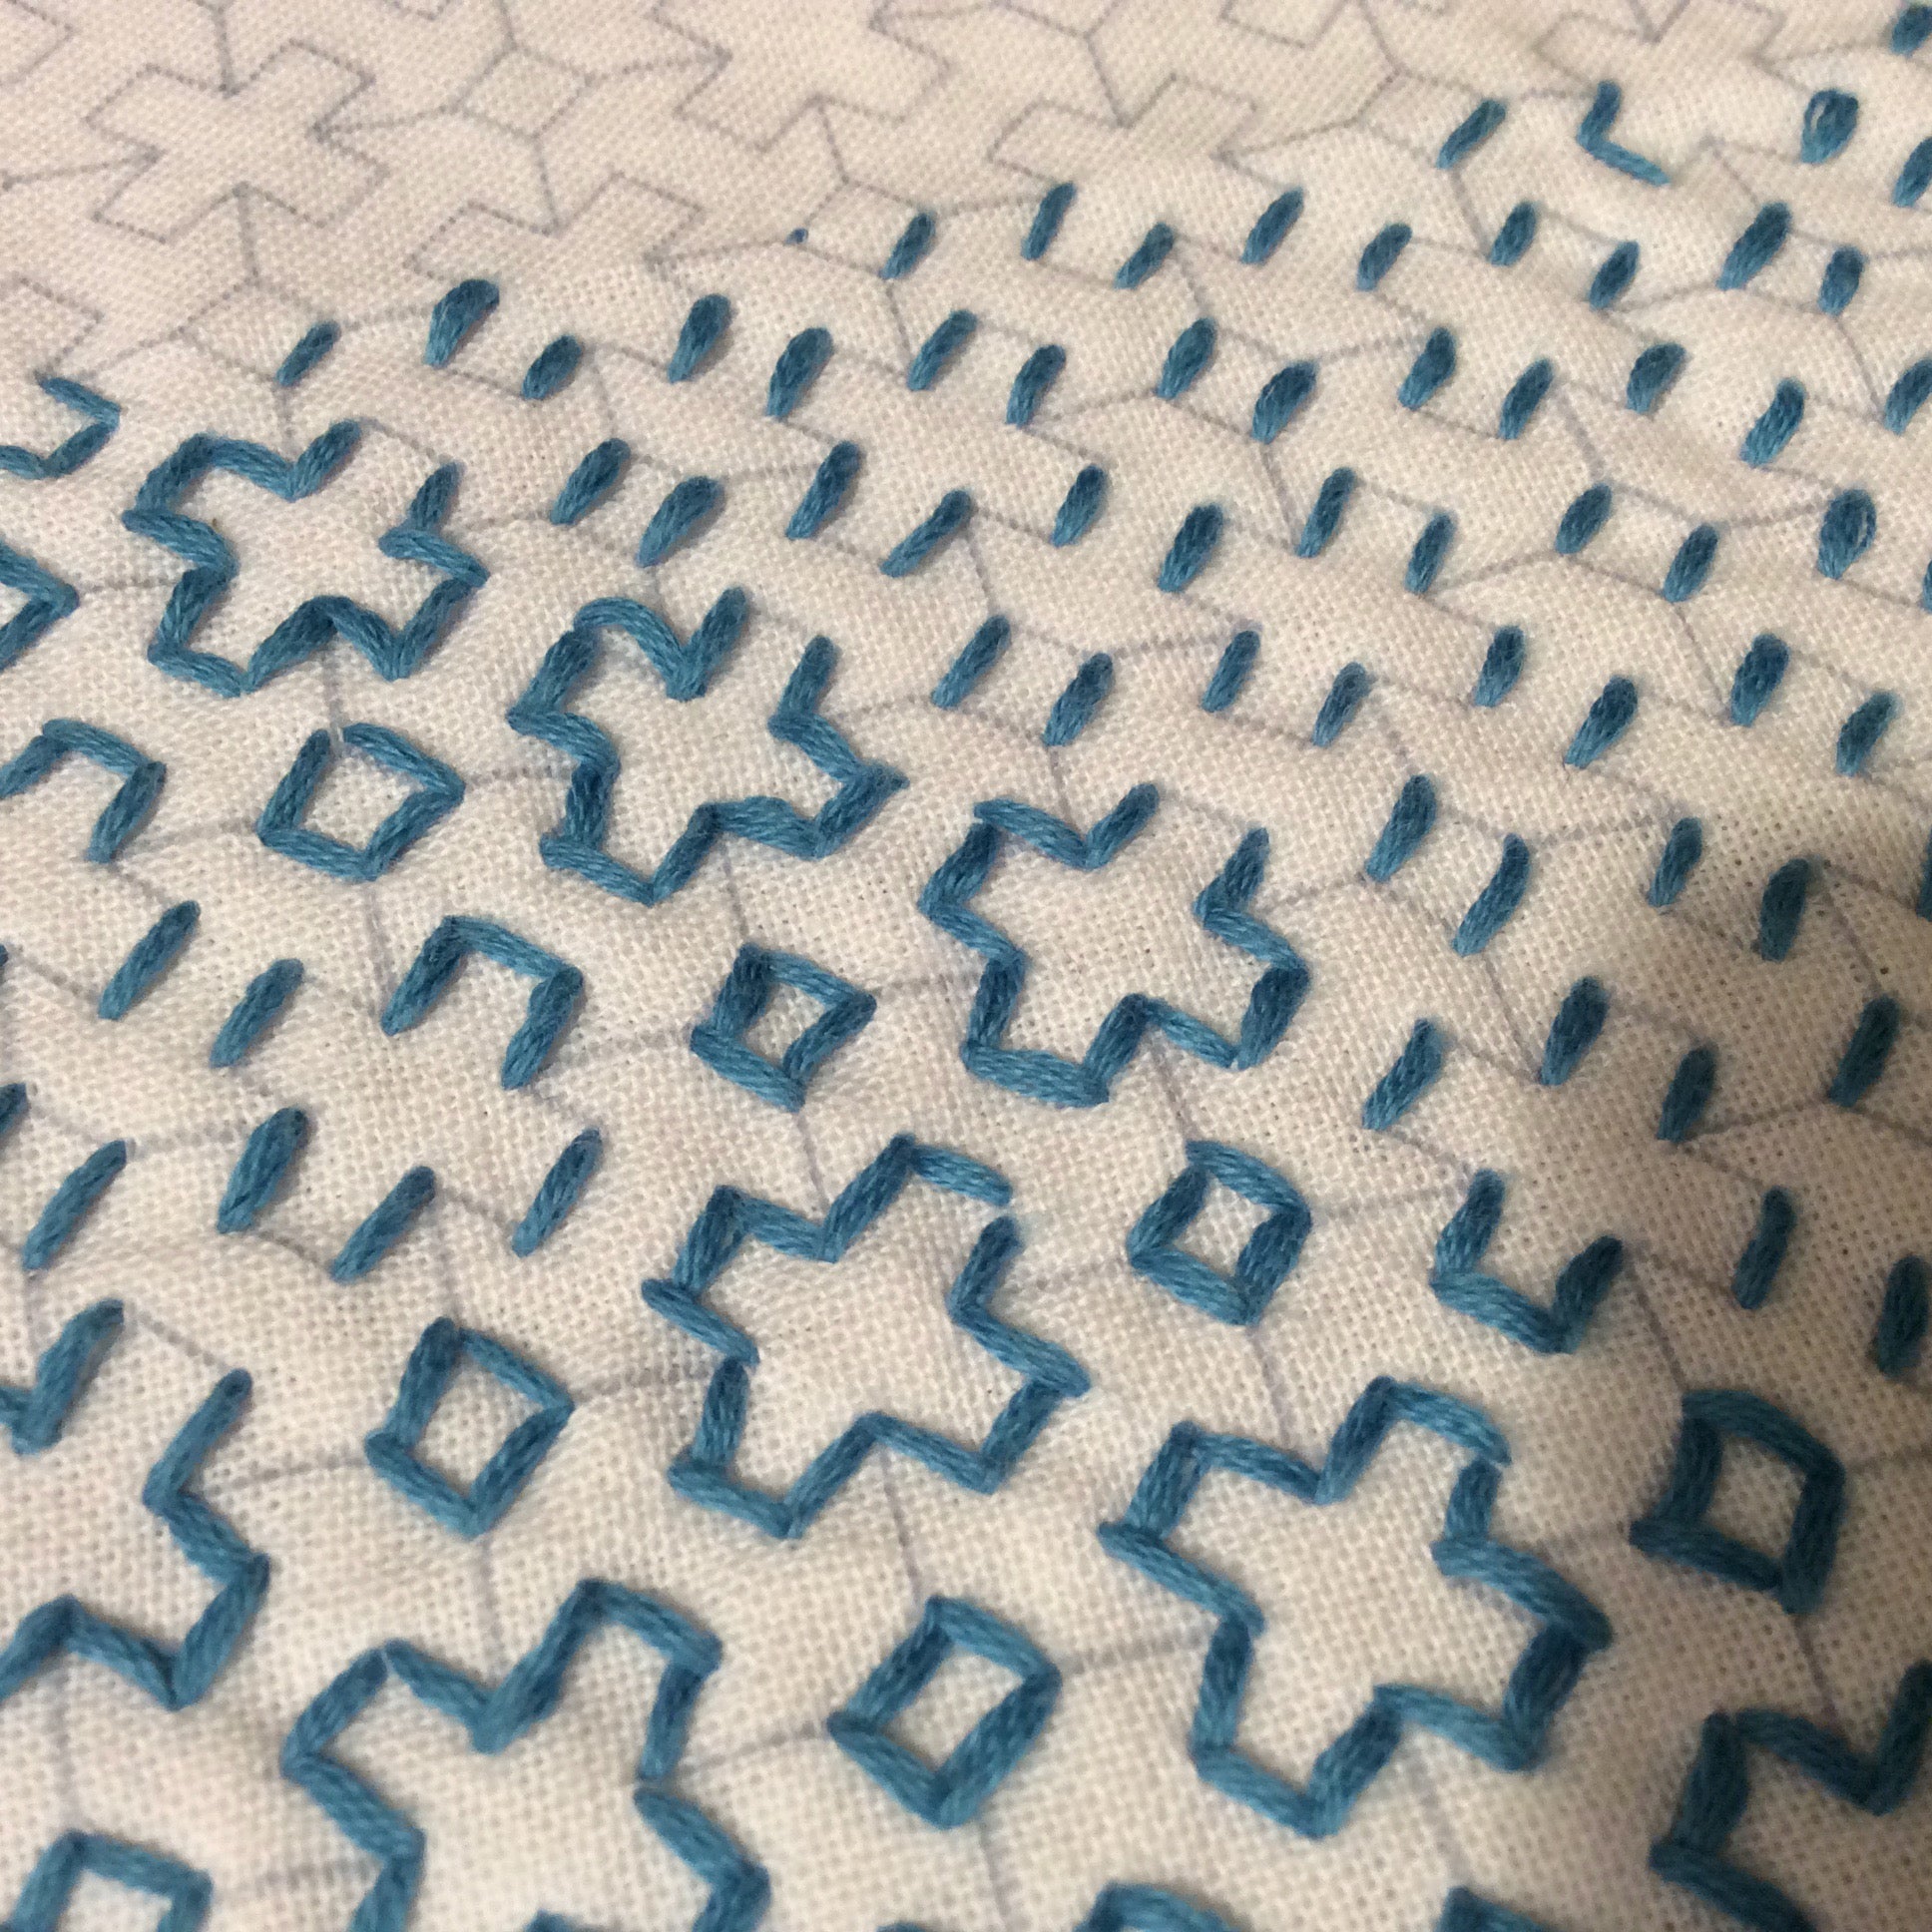 stitching a hitome-zashi cloth